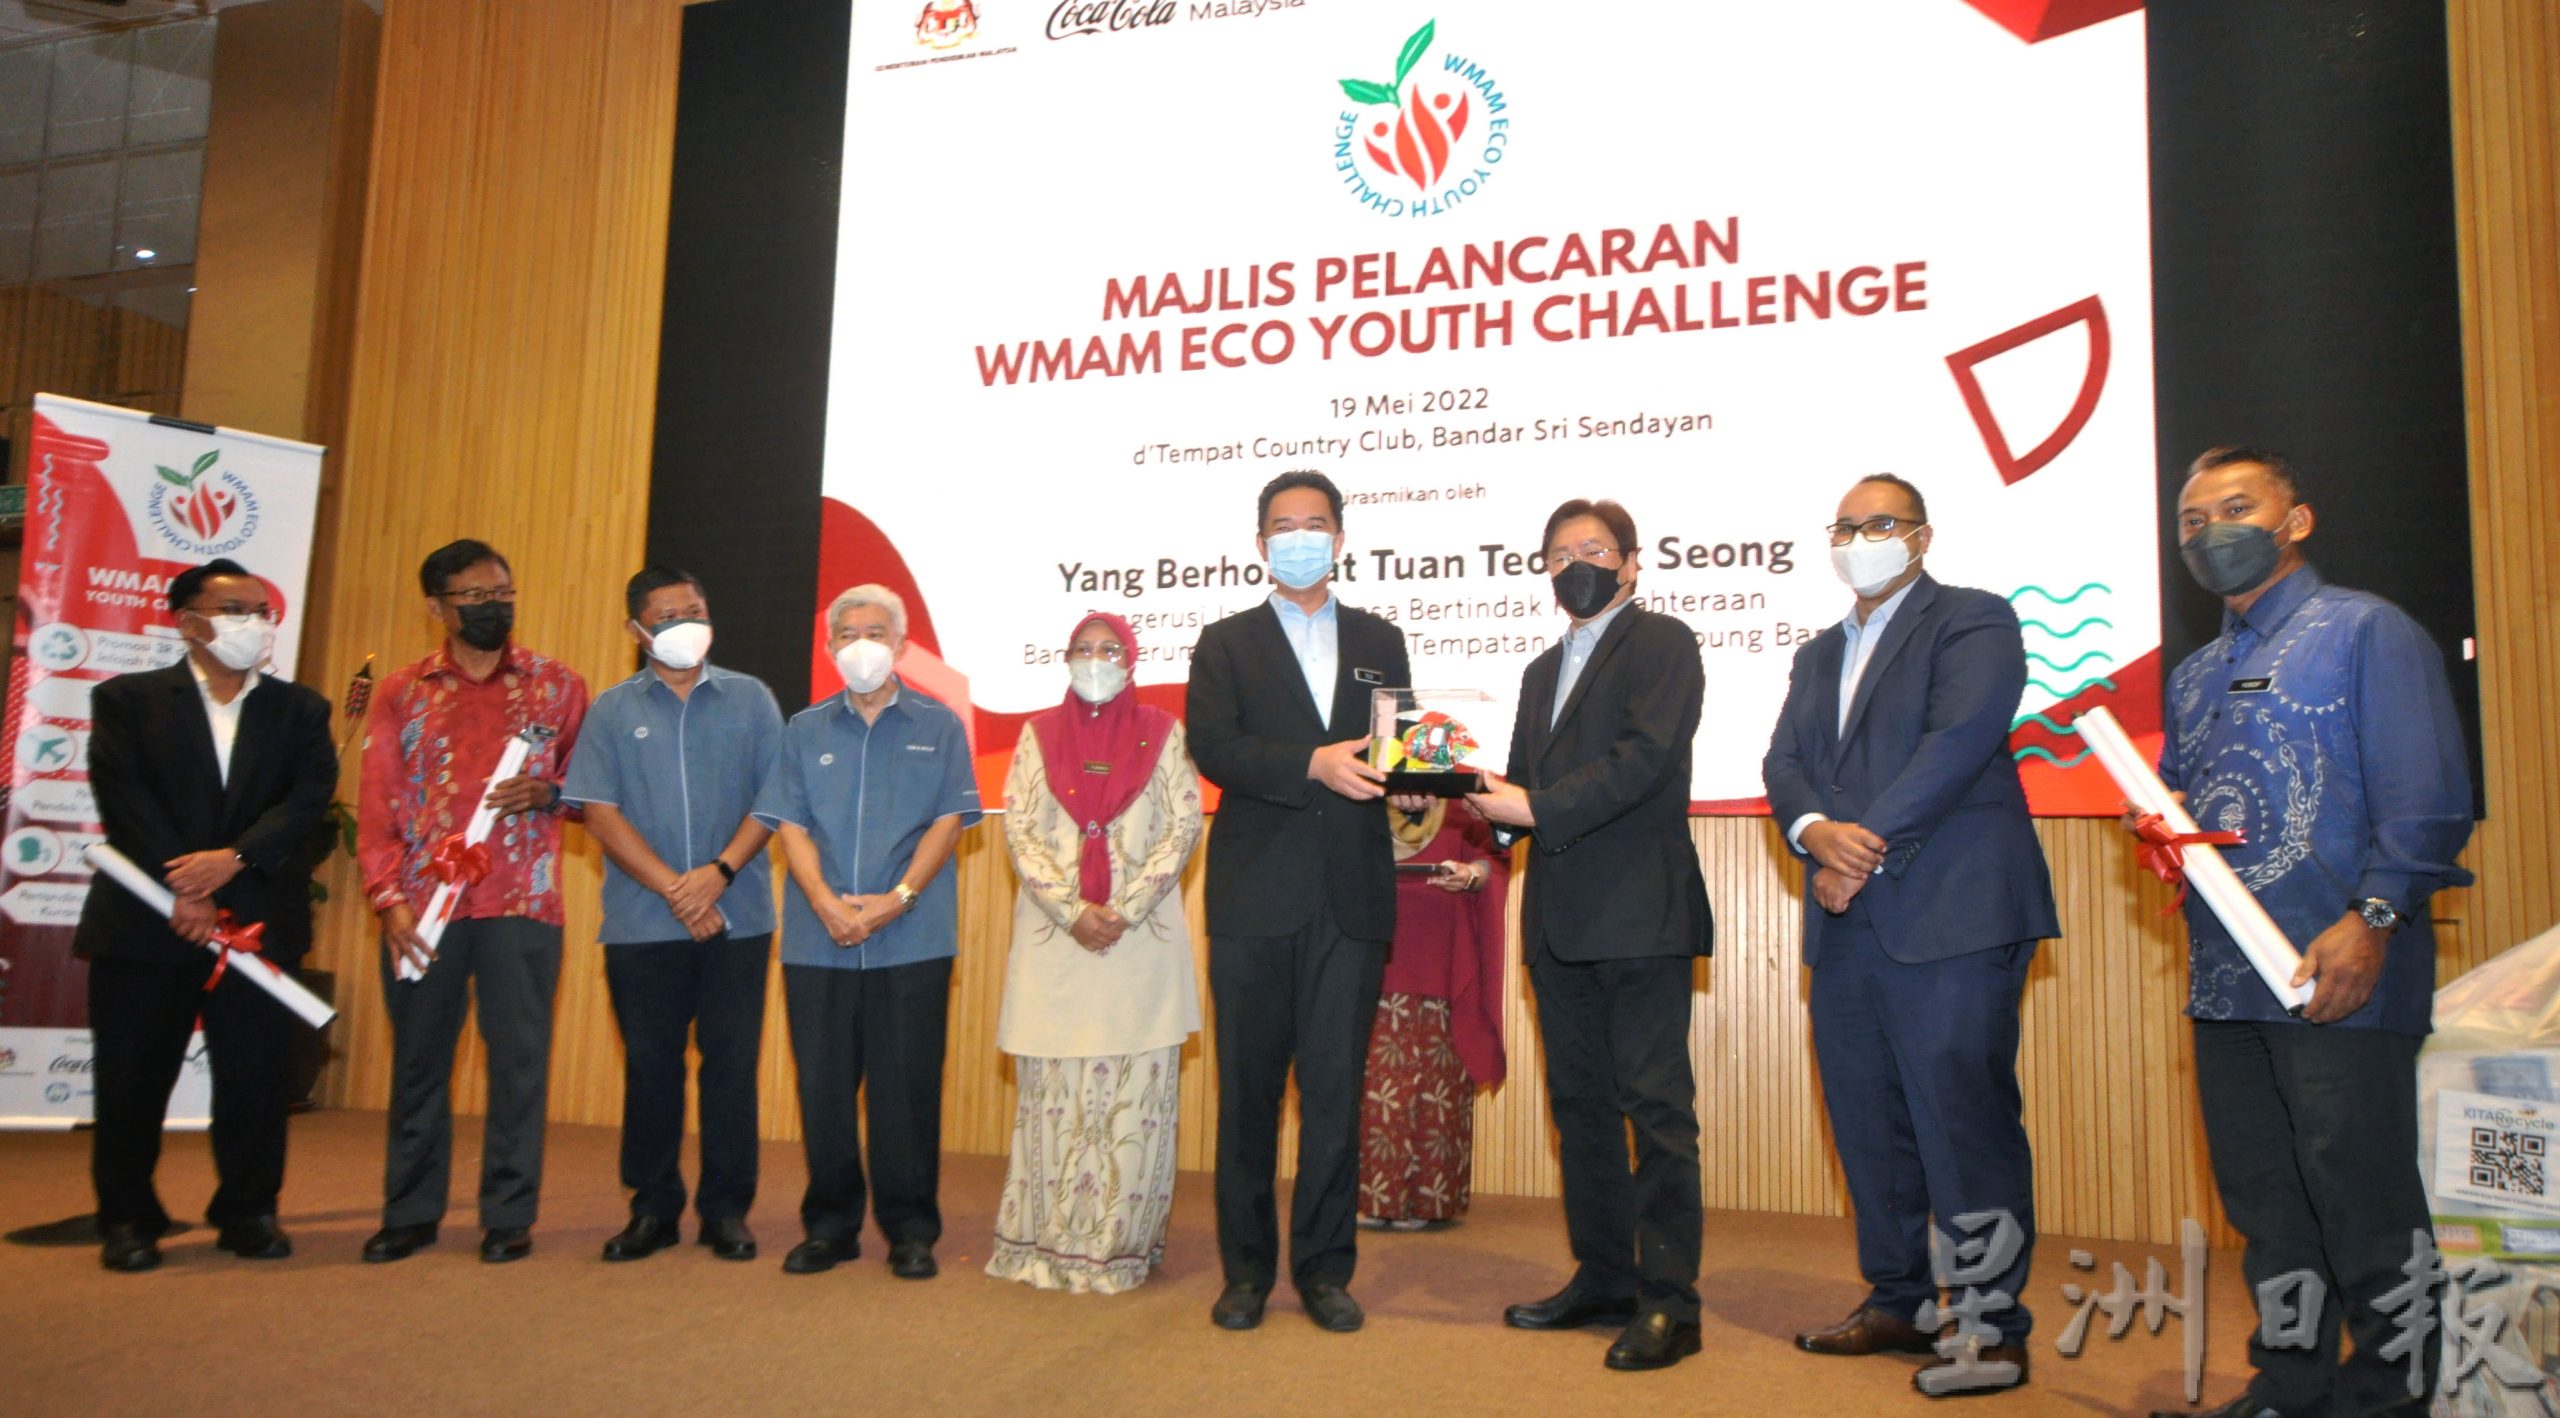 NS芙蓉：马来西亚废料管理协会将在3州150所学举办“世界青年生态环保挑战”